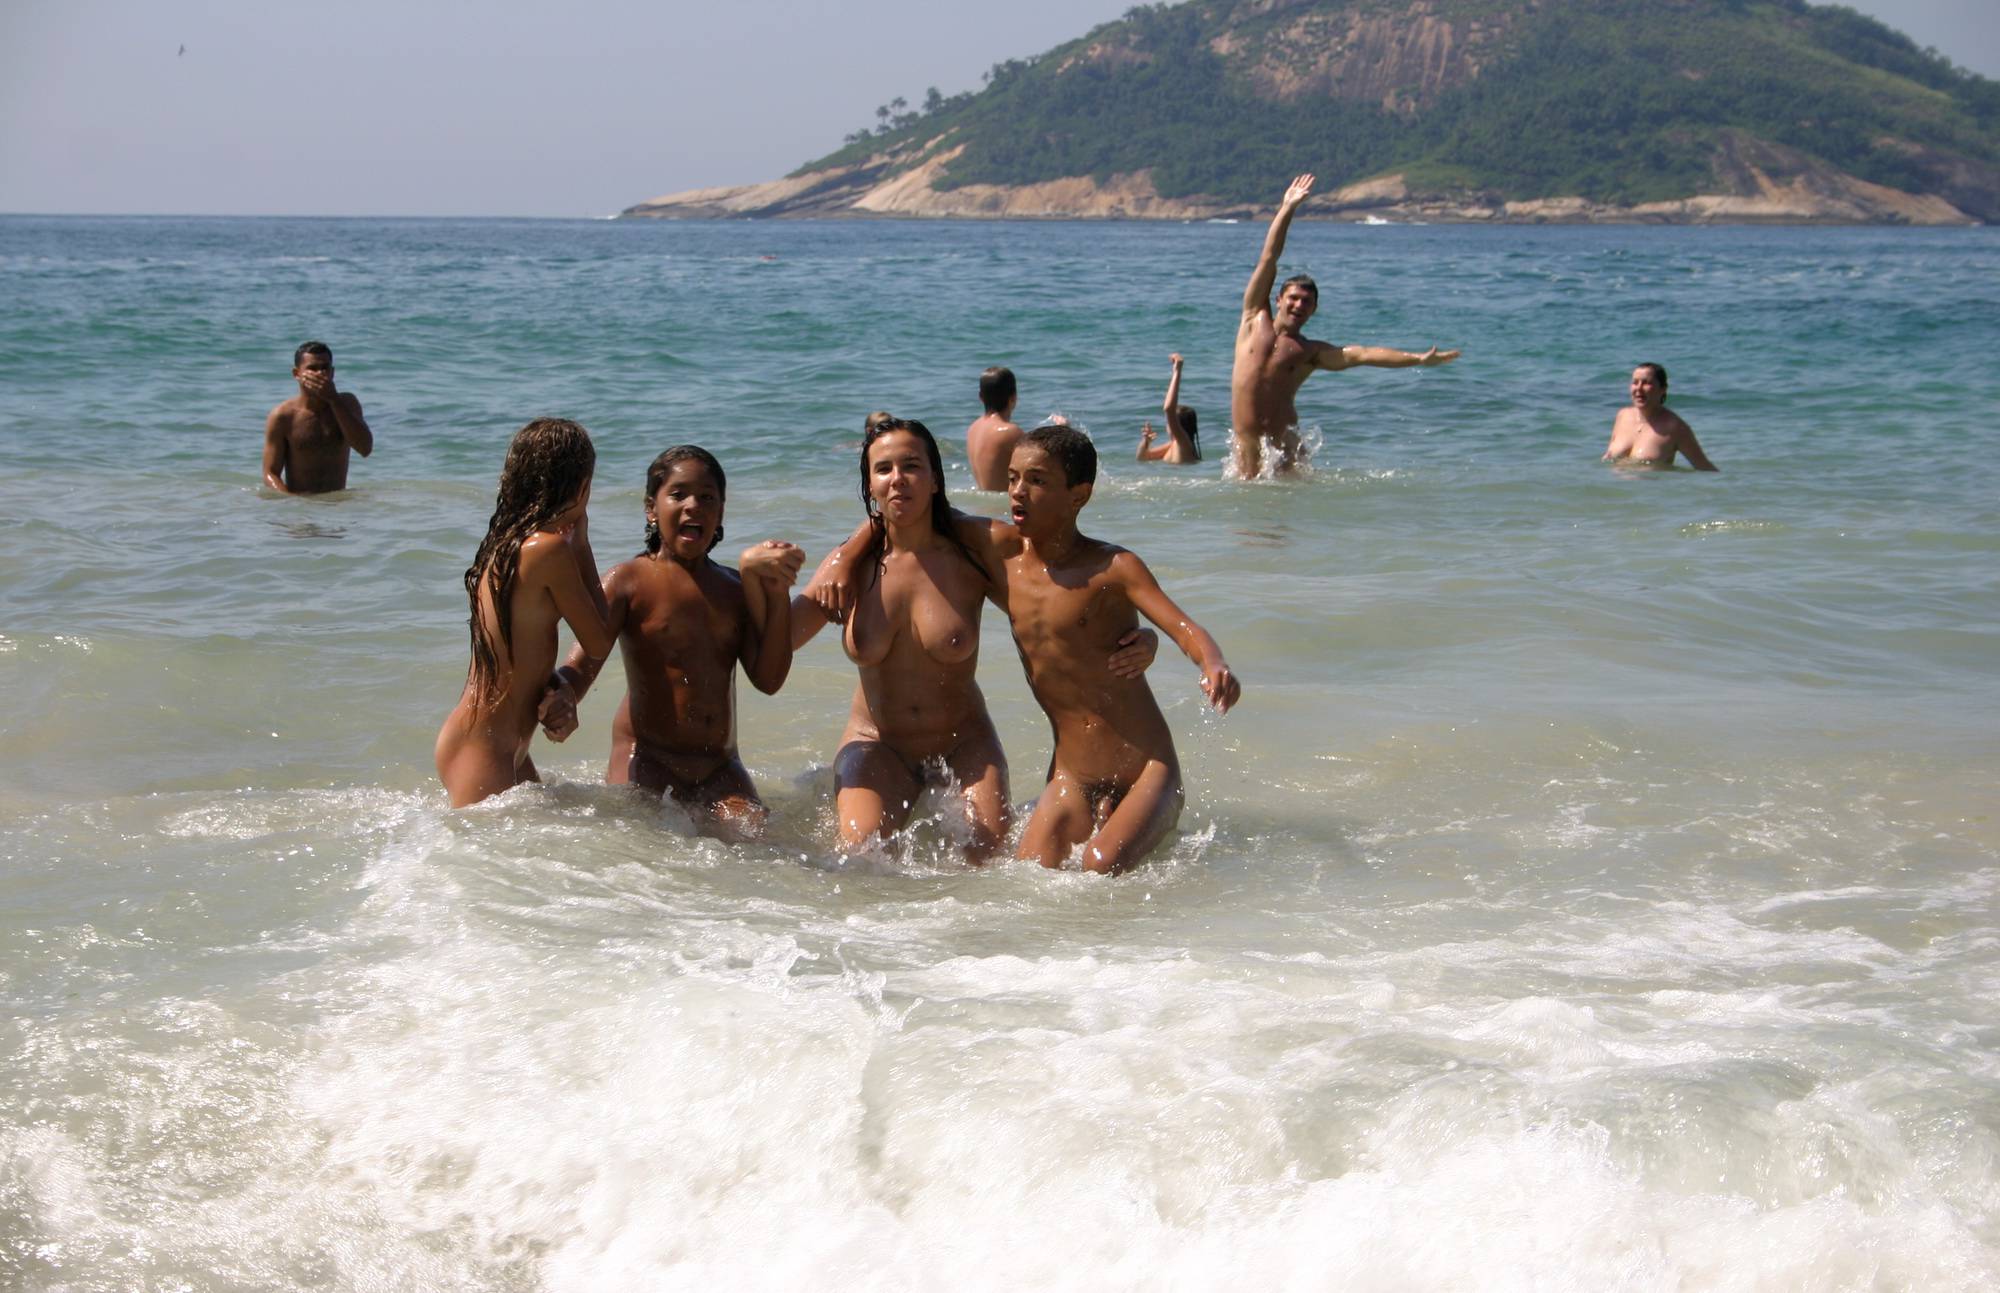 Purenudism Images-Brazilian Water Splashing - 2